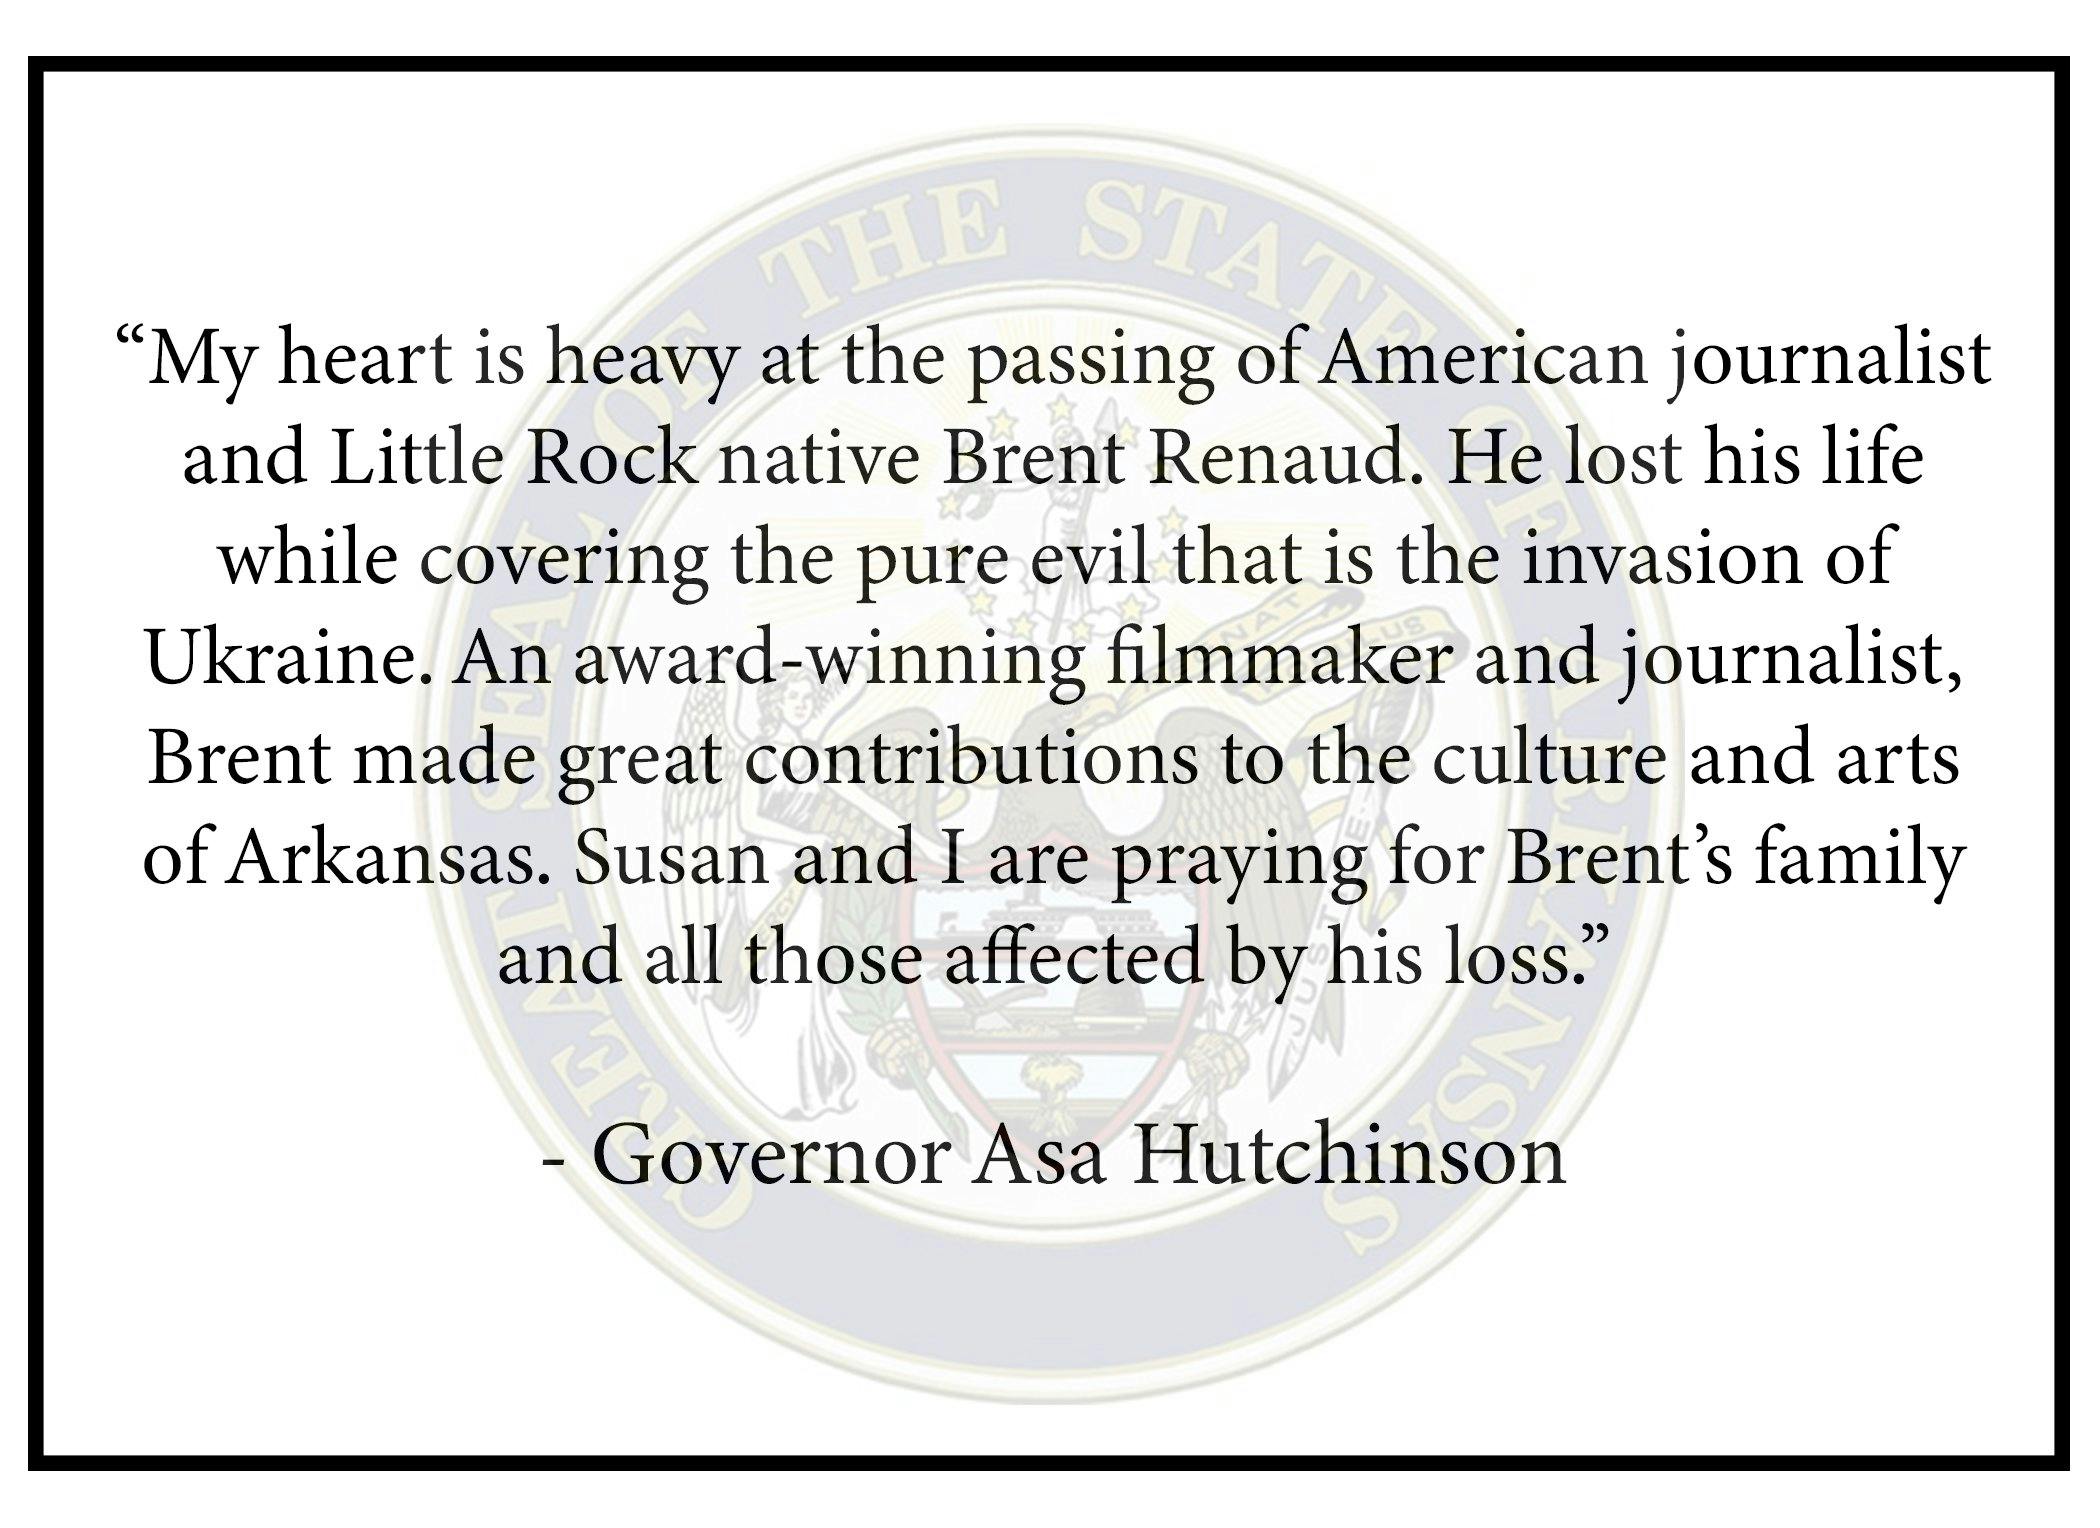 Governor Asa Hutchinson (@asahutchinson on Twitter)